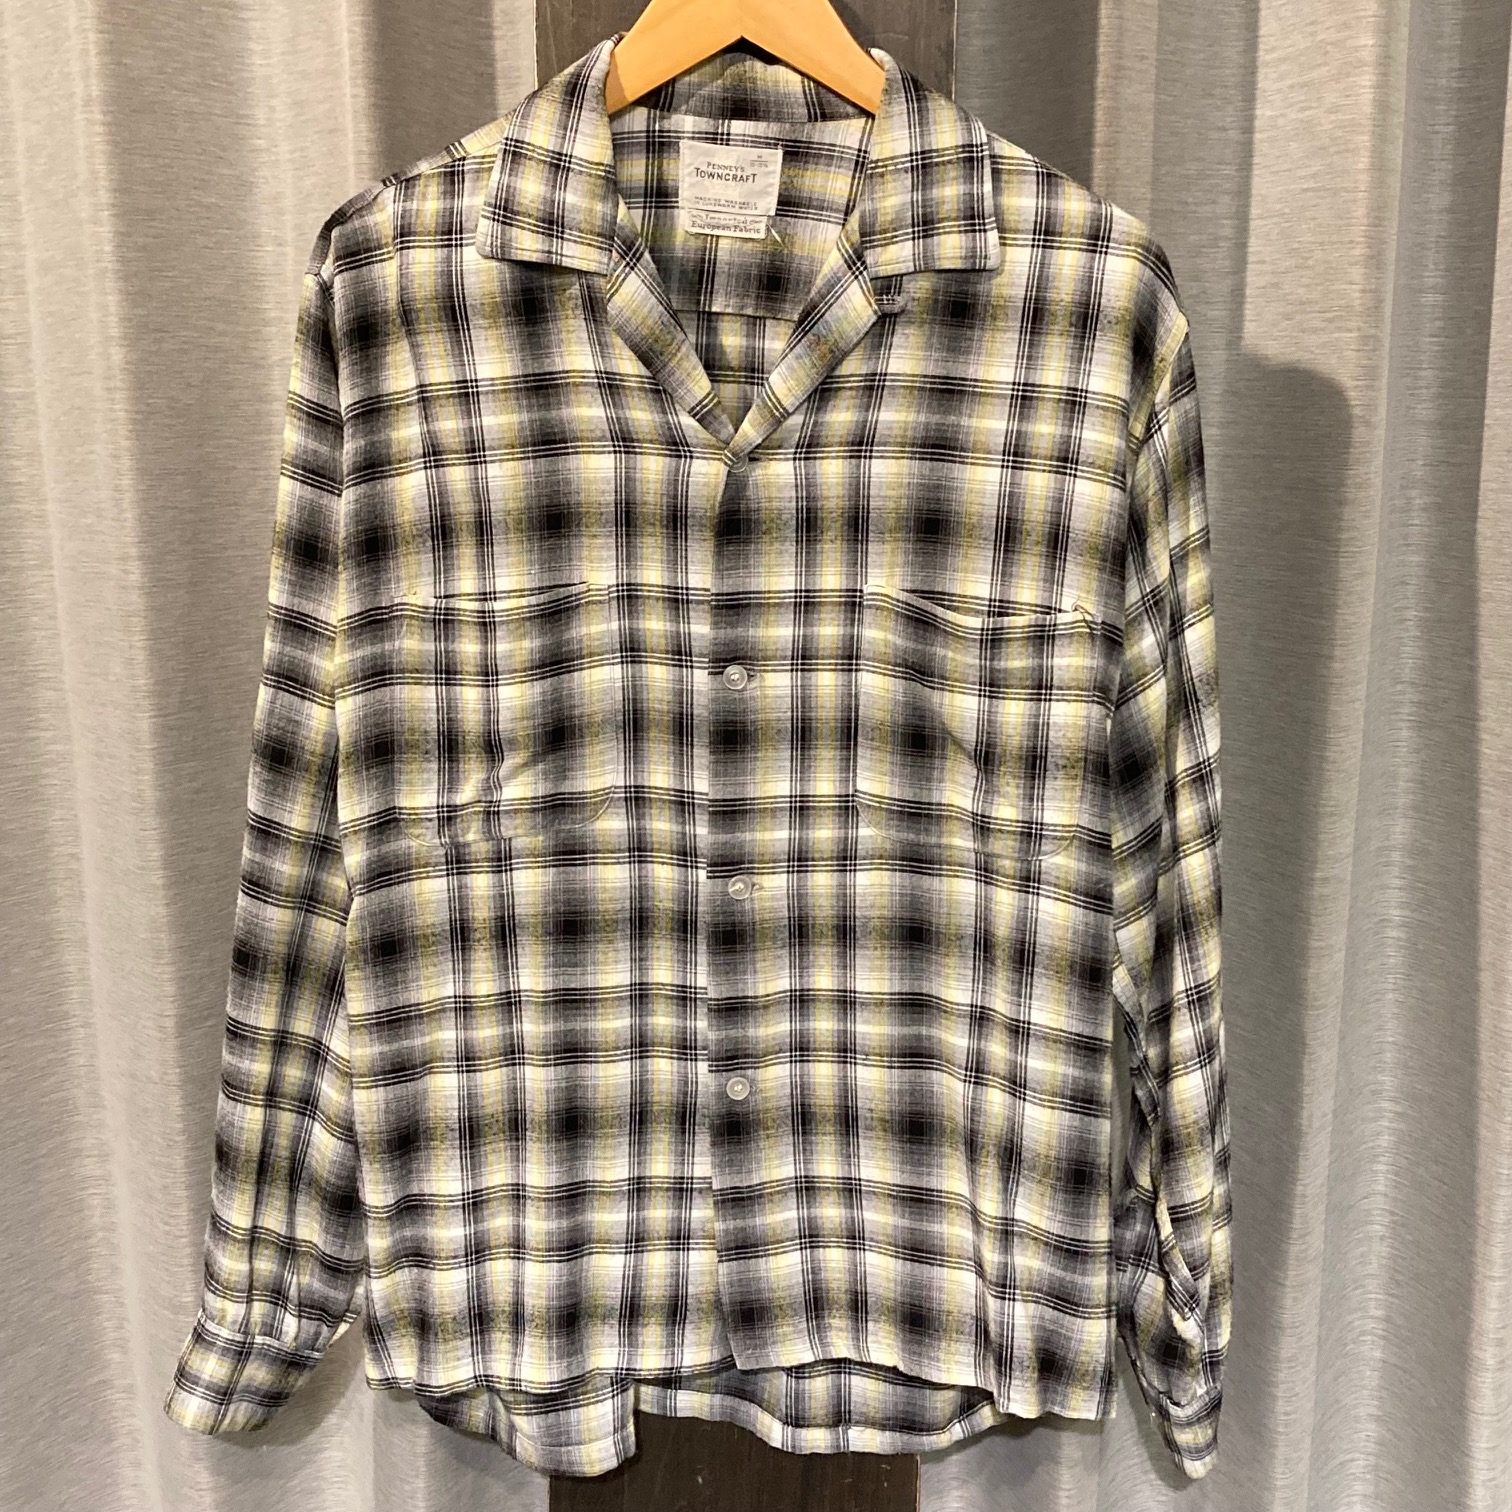 60s vintage rayon shirt オンブレ - シャツ